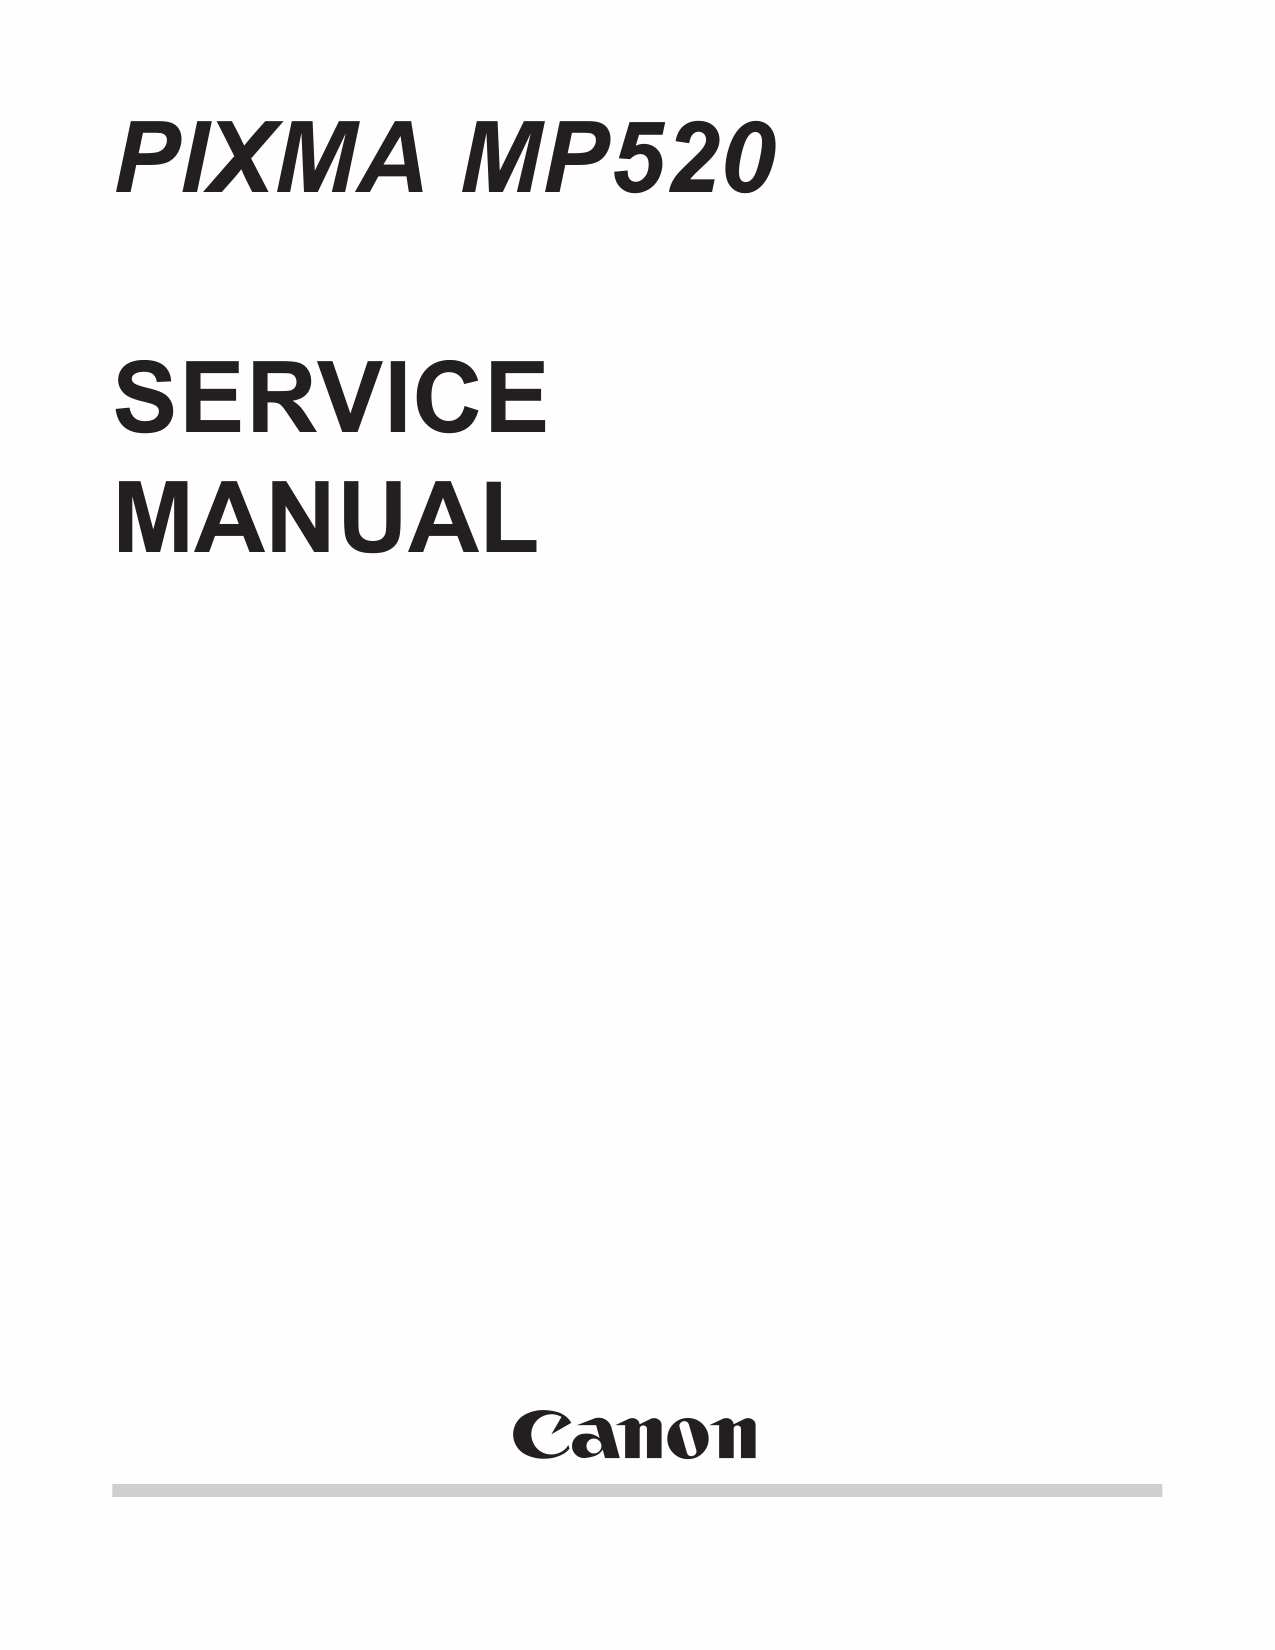 Canon PIXMA MP520 Parts and Service Manual-1